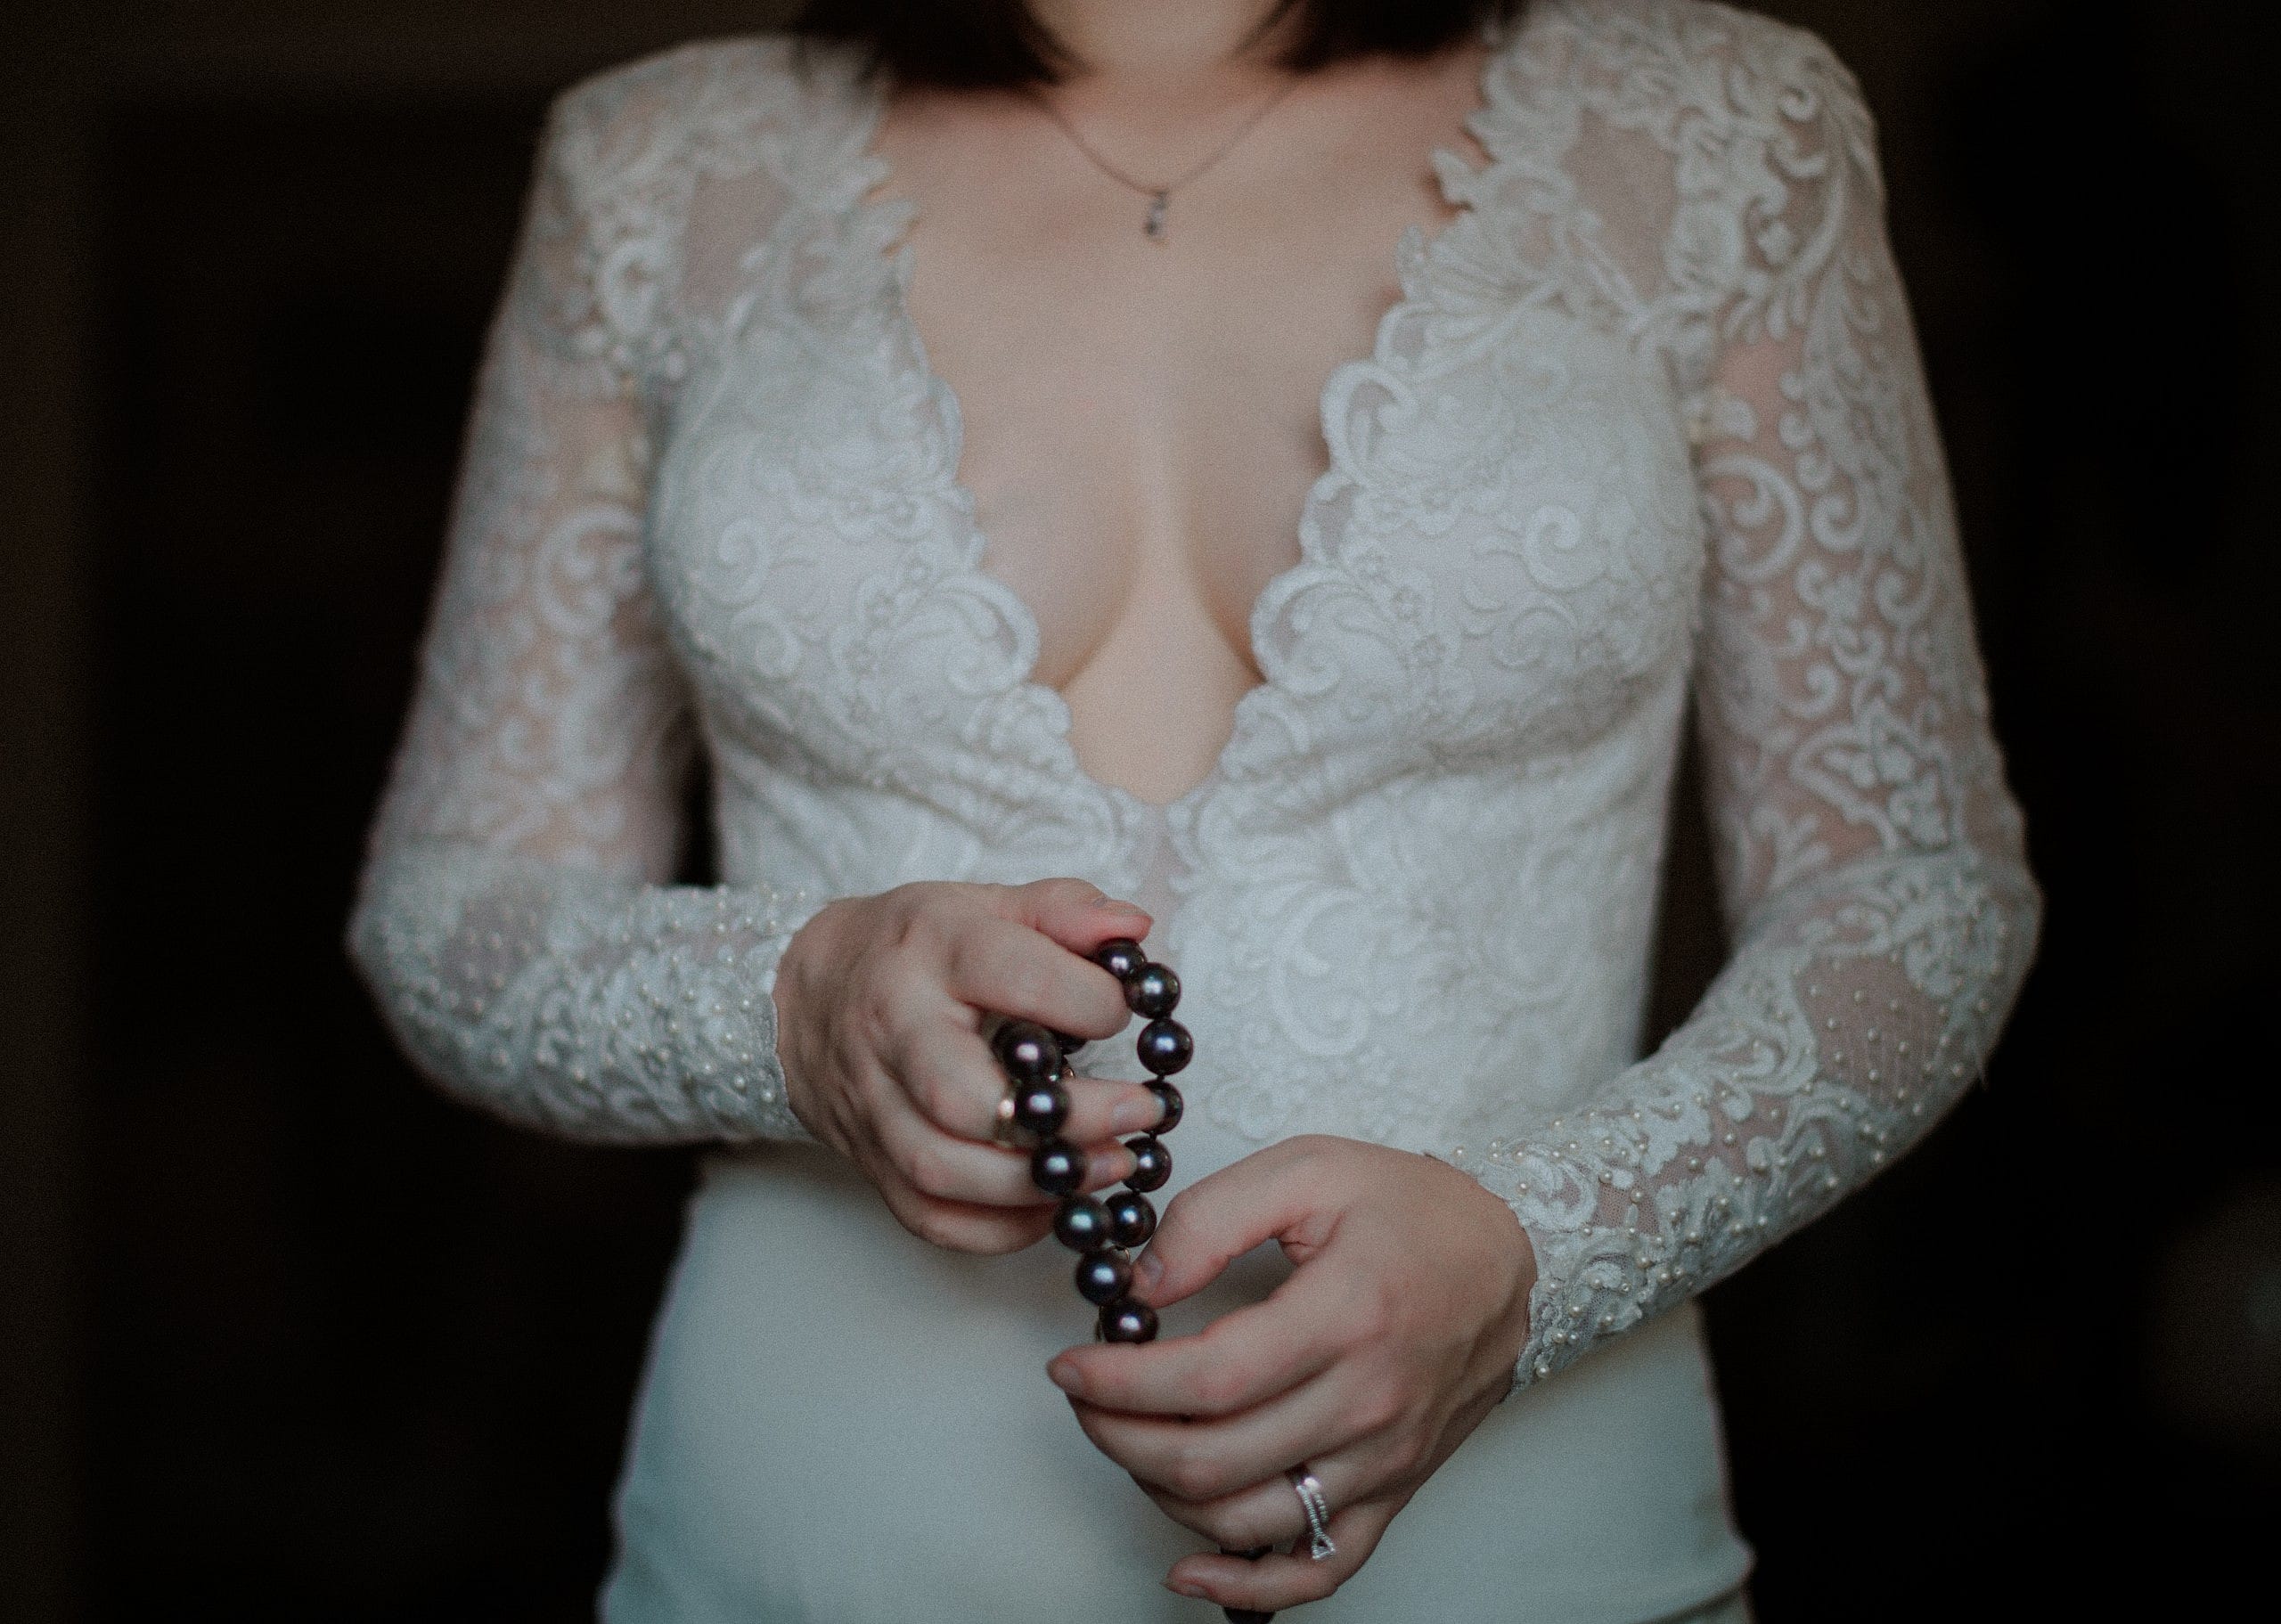 Bride in wedding dress holds black pearls